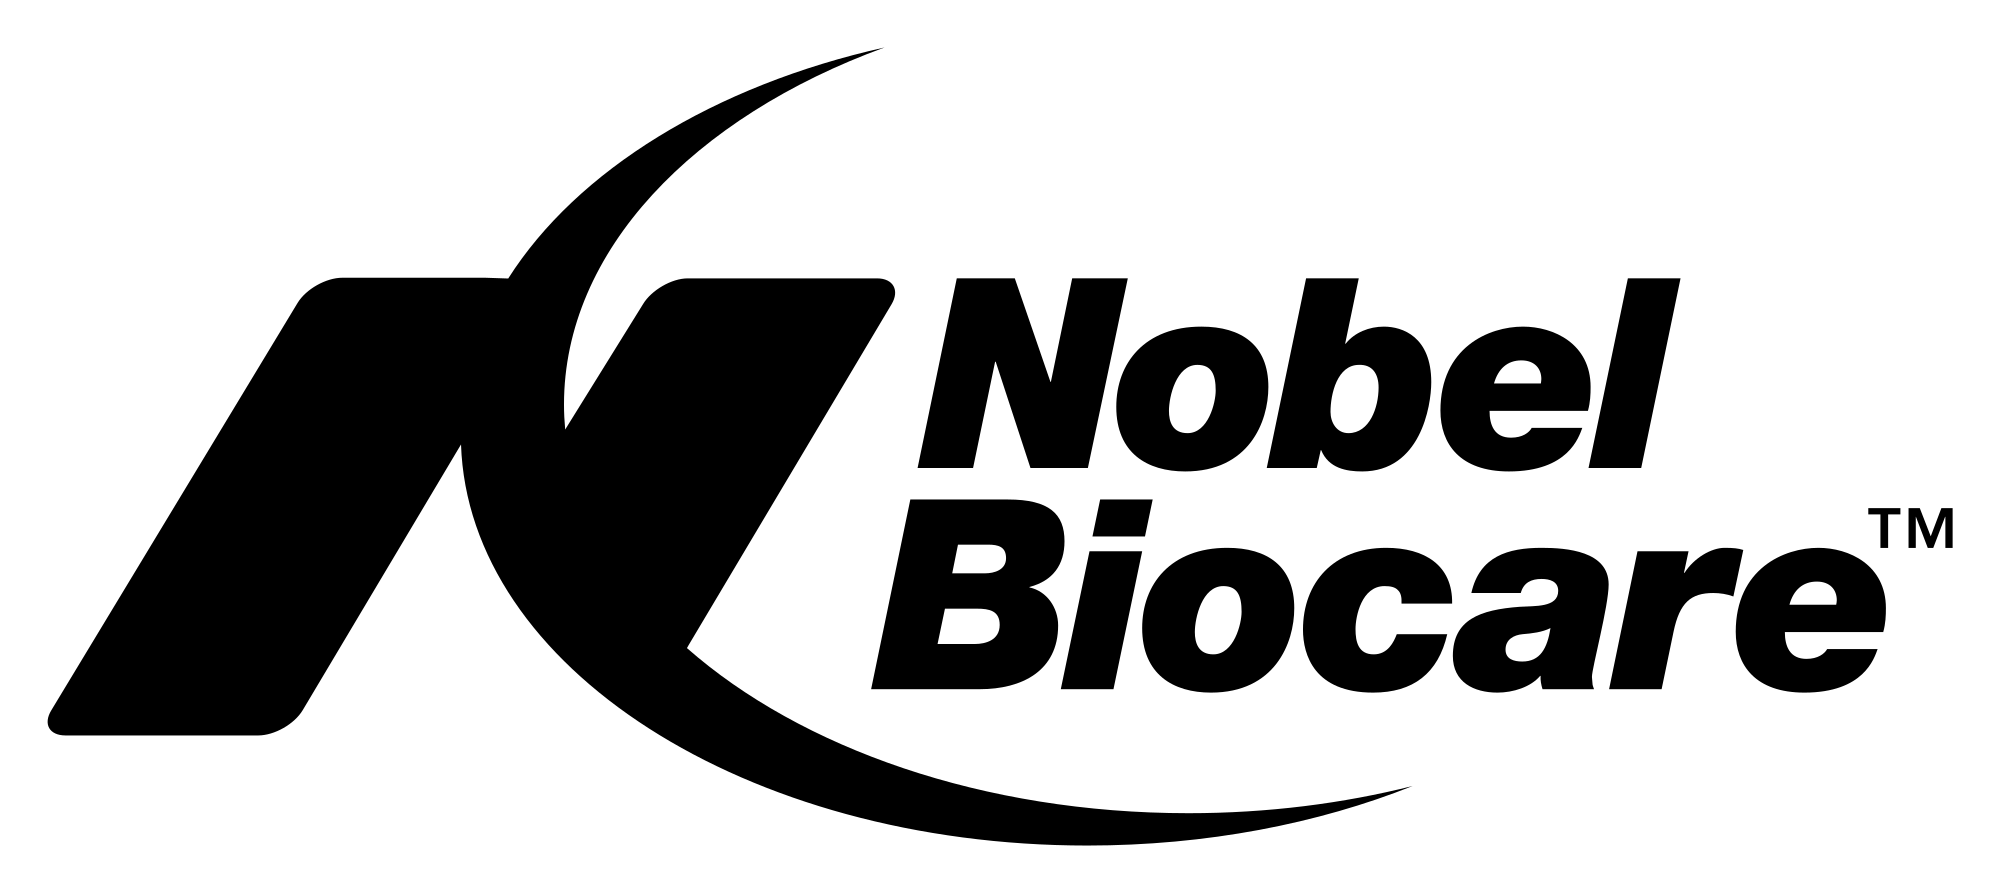 Nobel Biocare Logo